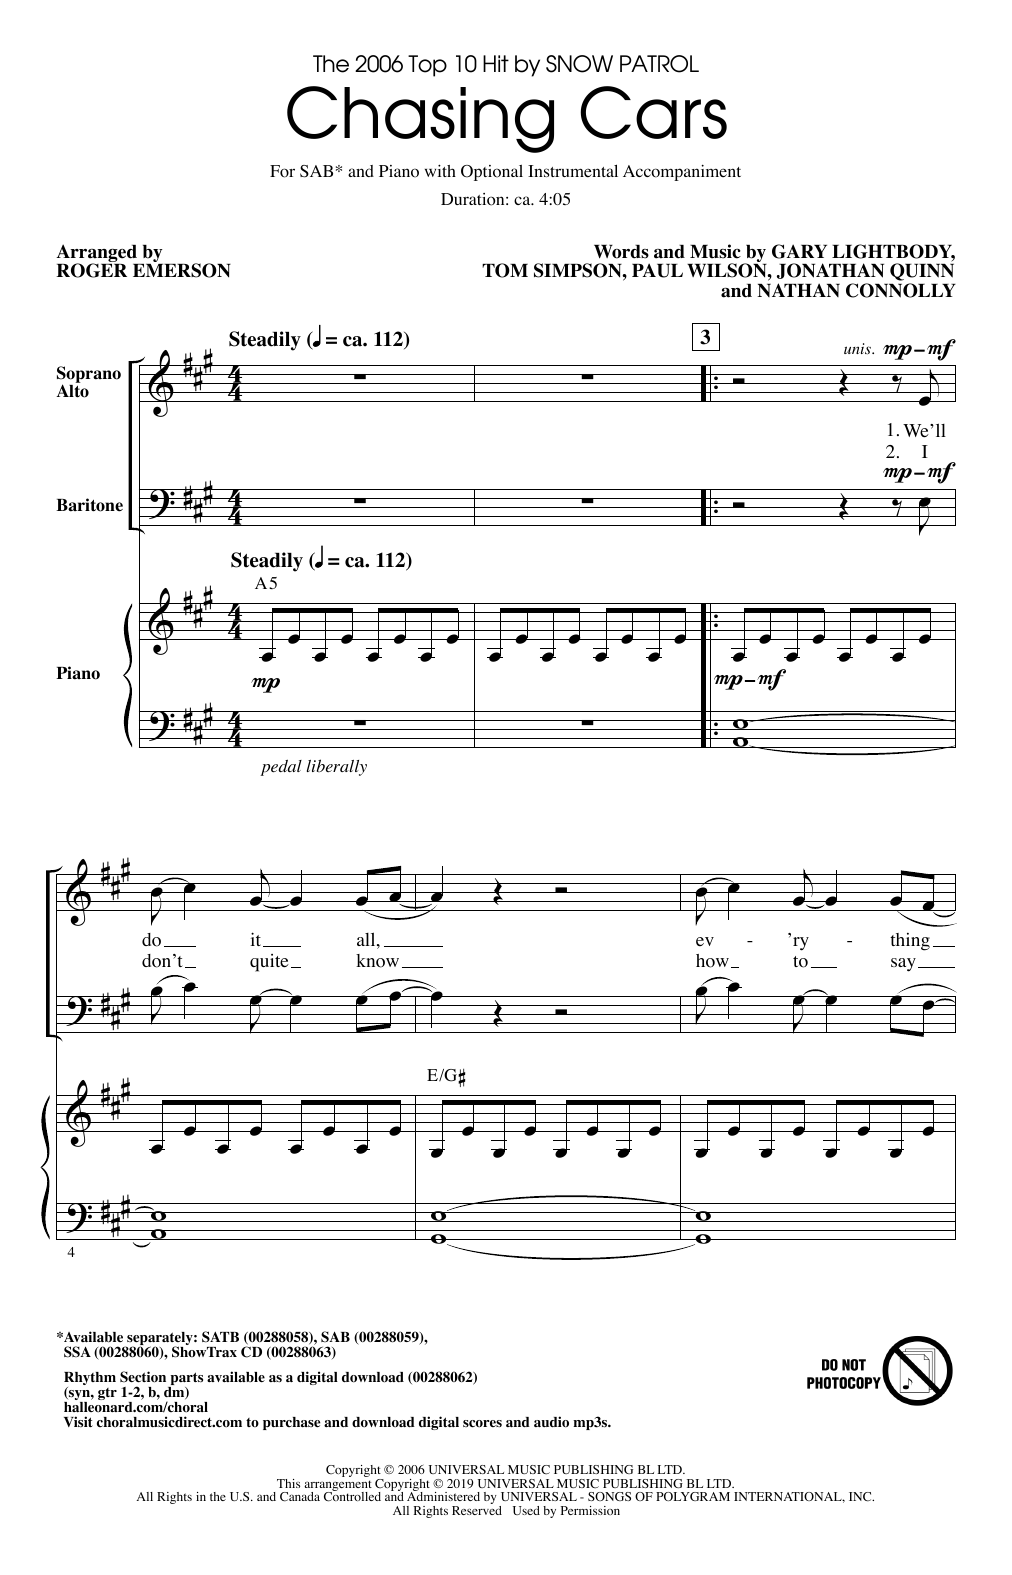 Snow Patrol Chasing Cars (arr. Roger Emerson) Sheet Music Notes & Chords for SAB Choir - Download or Print PDF